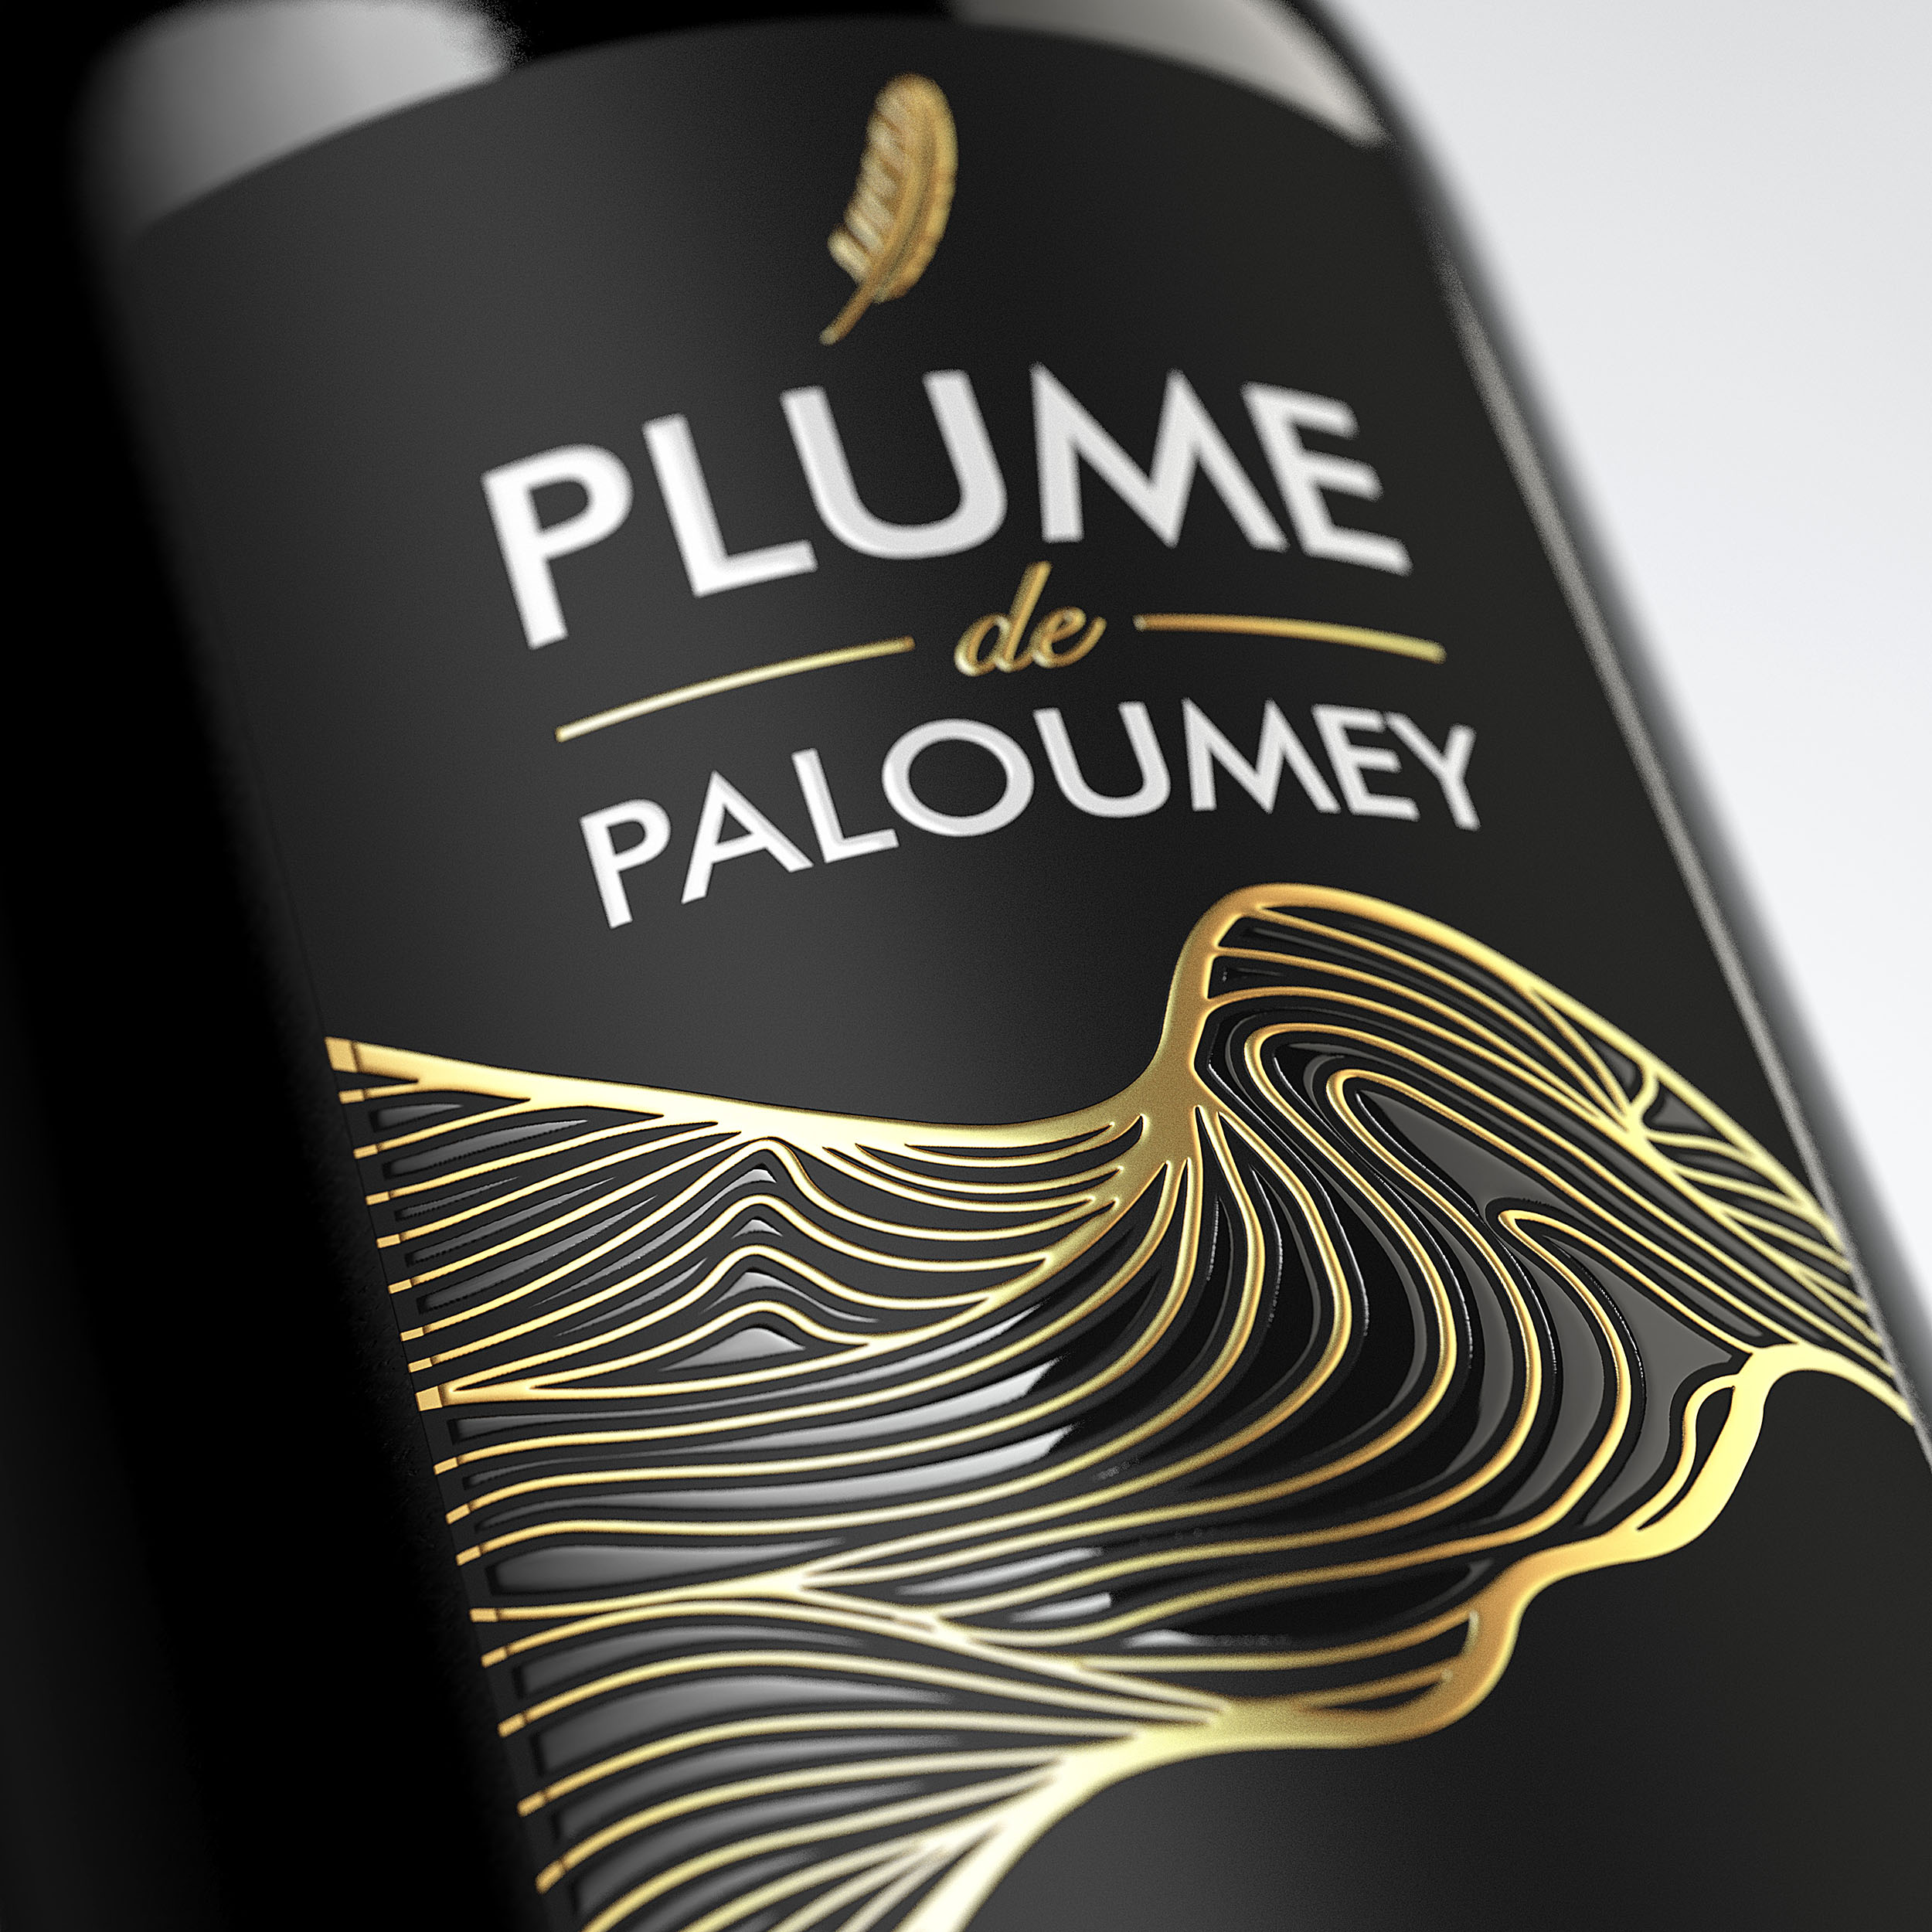 Label Design for Plume de Paloumey Wine